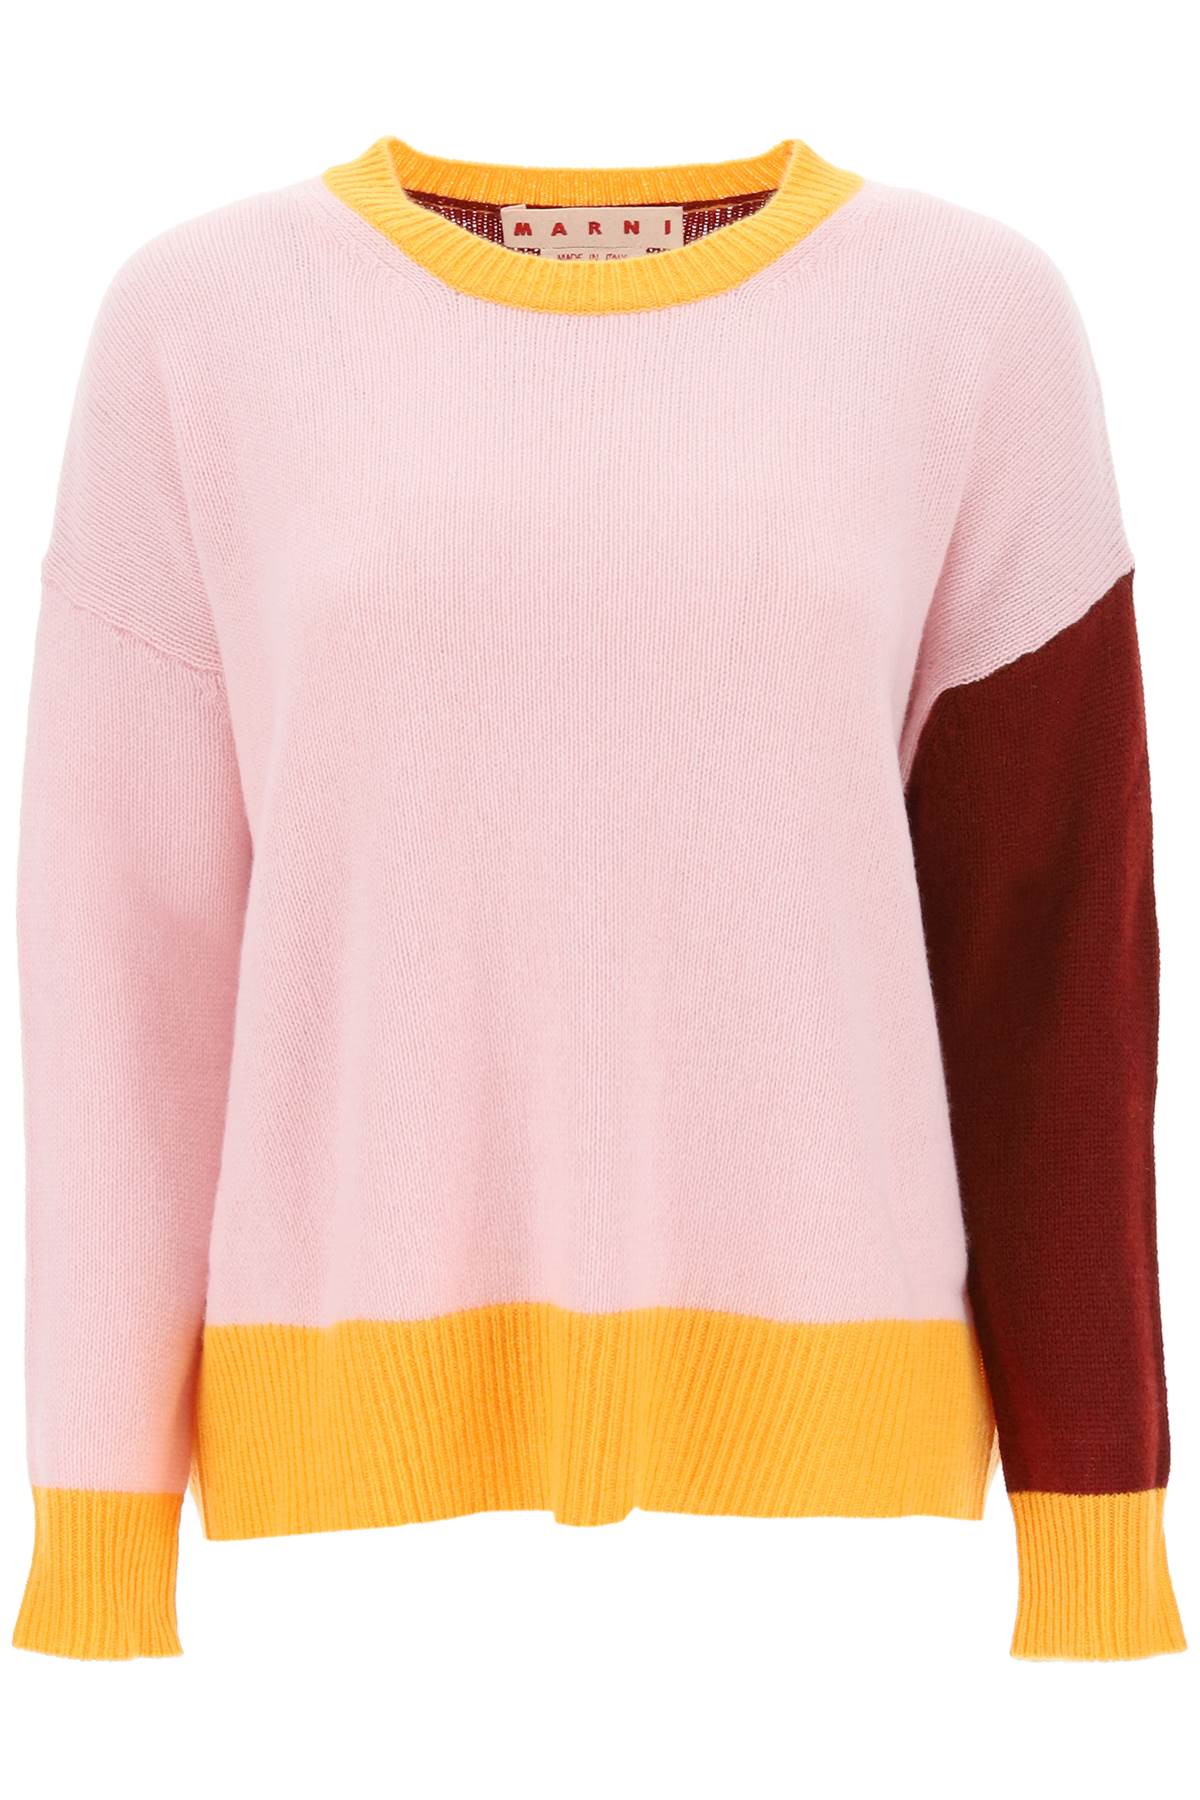 Marni colorblocked cashmere sweater-0